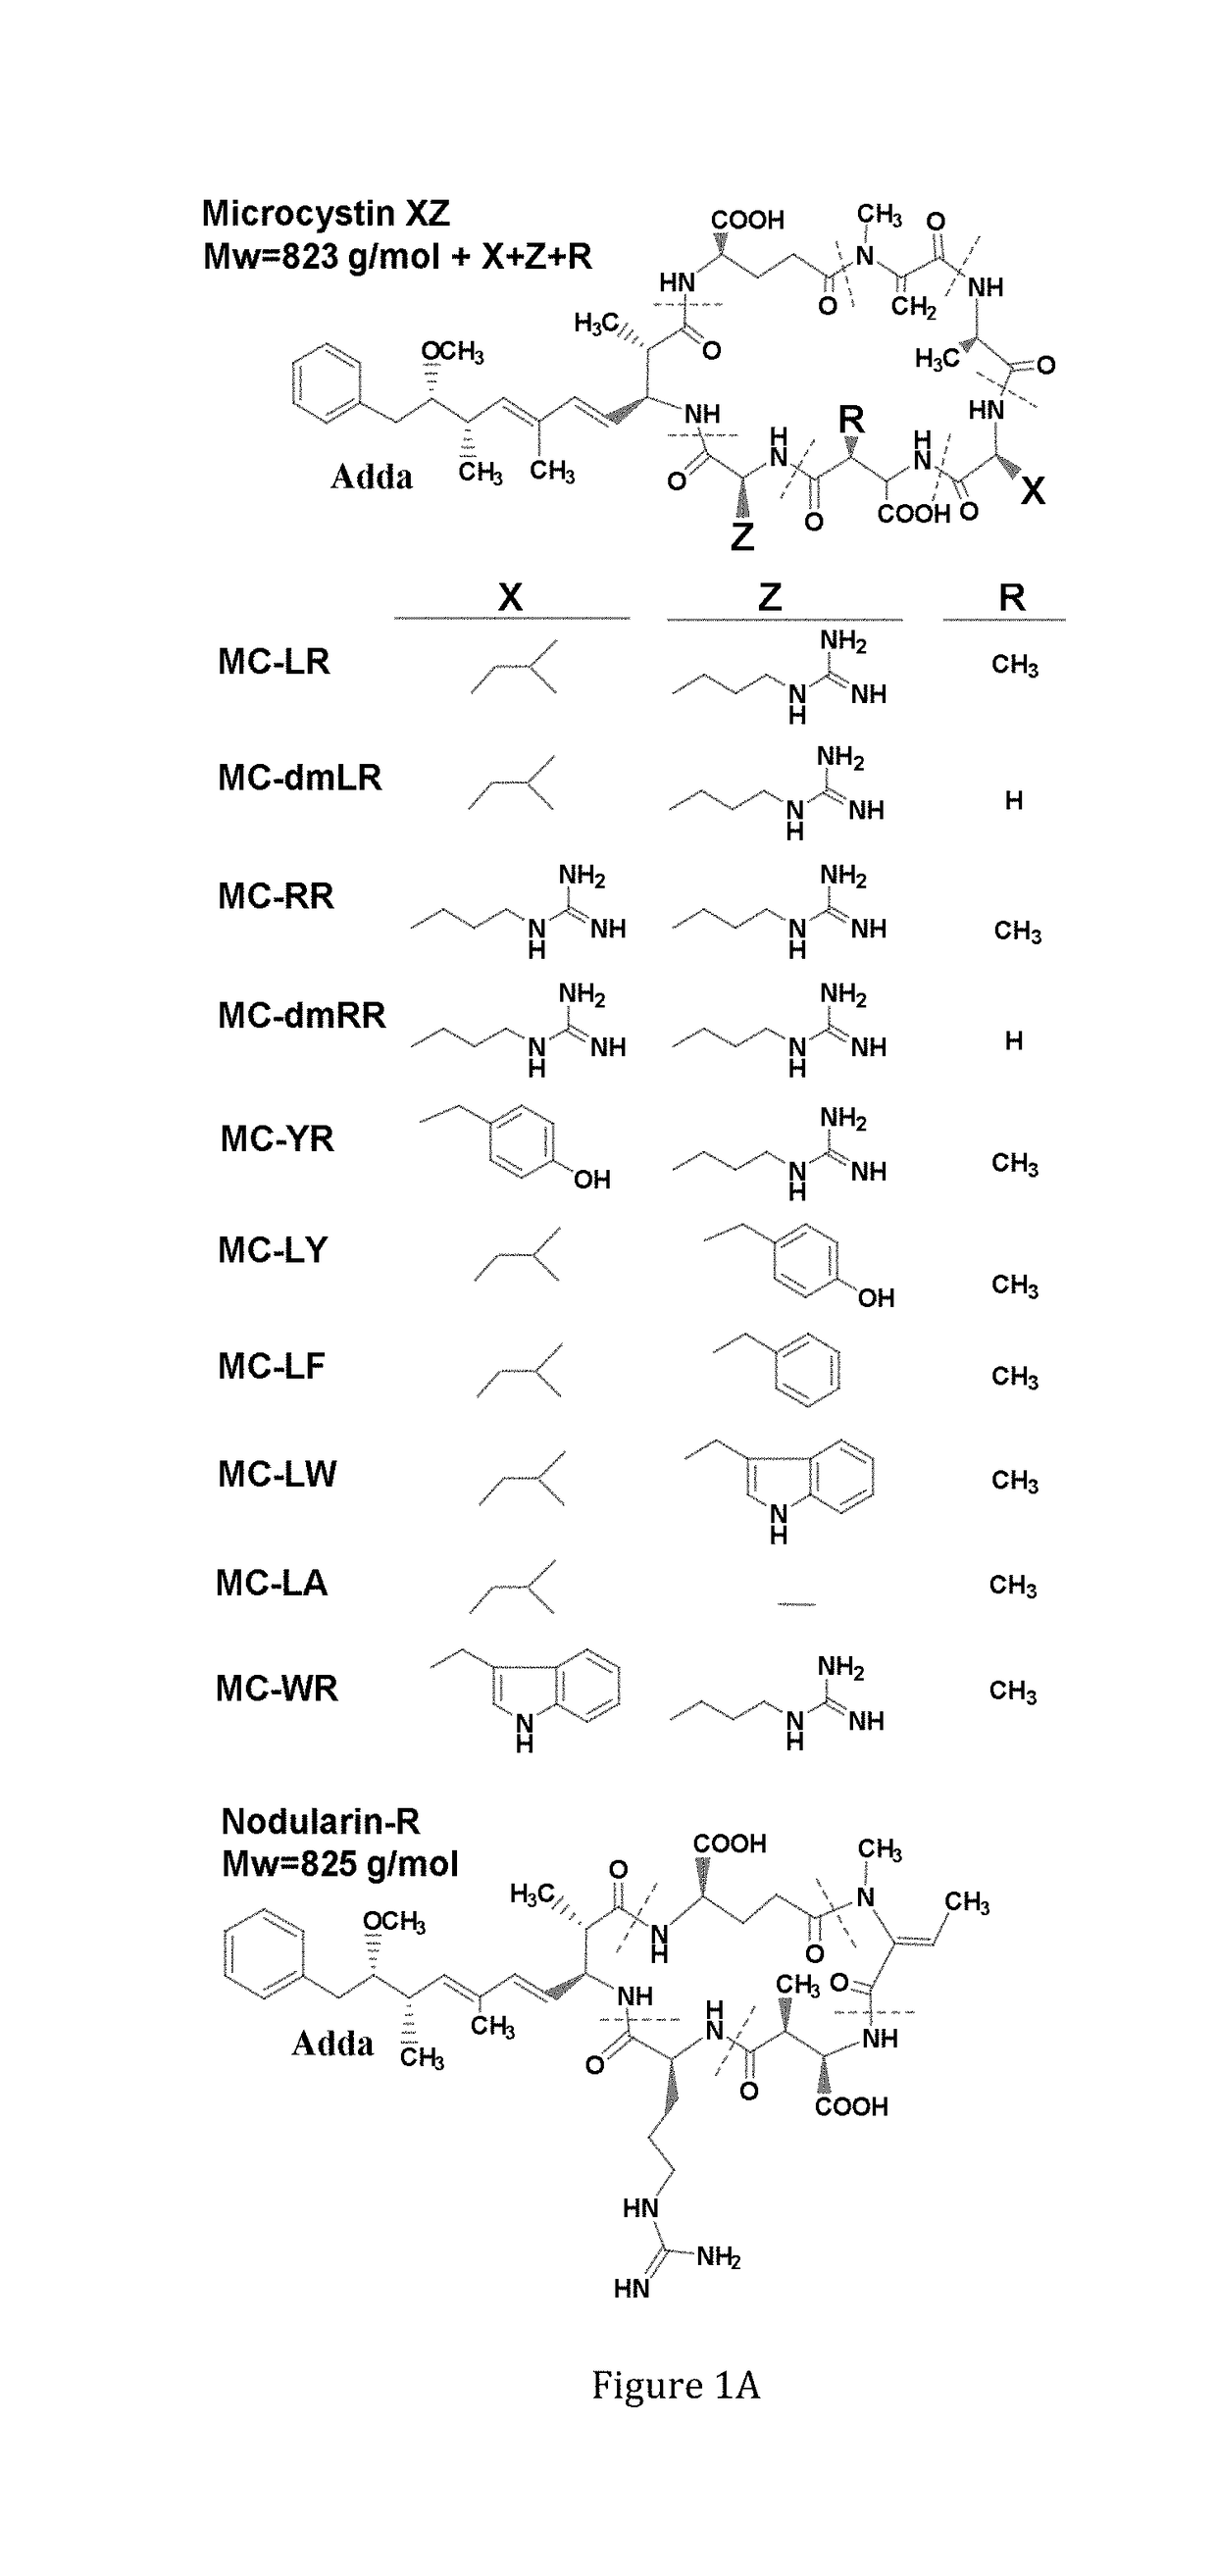 Antibodies against immunocomplexes comprising cyanobacterial cyclic peptide hepatotoxins